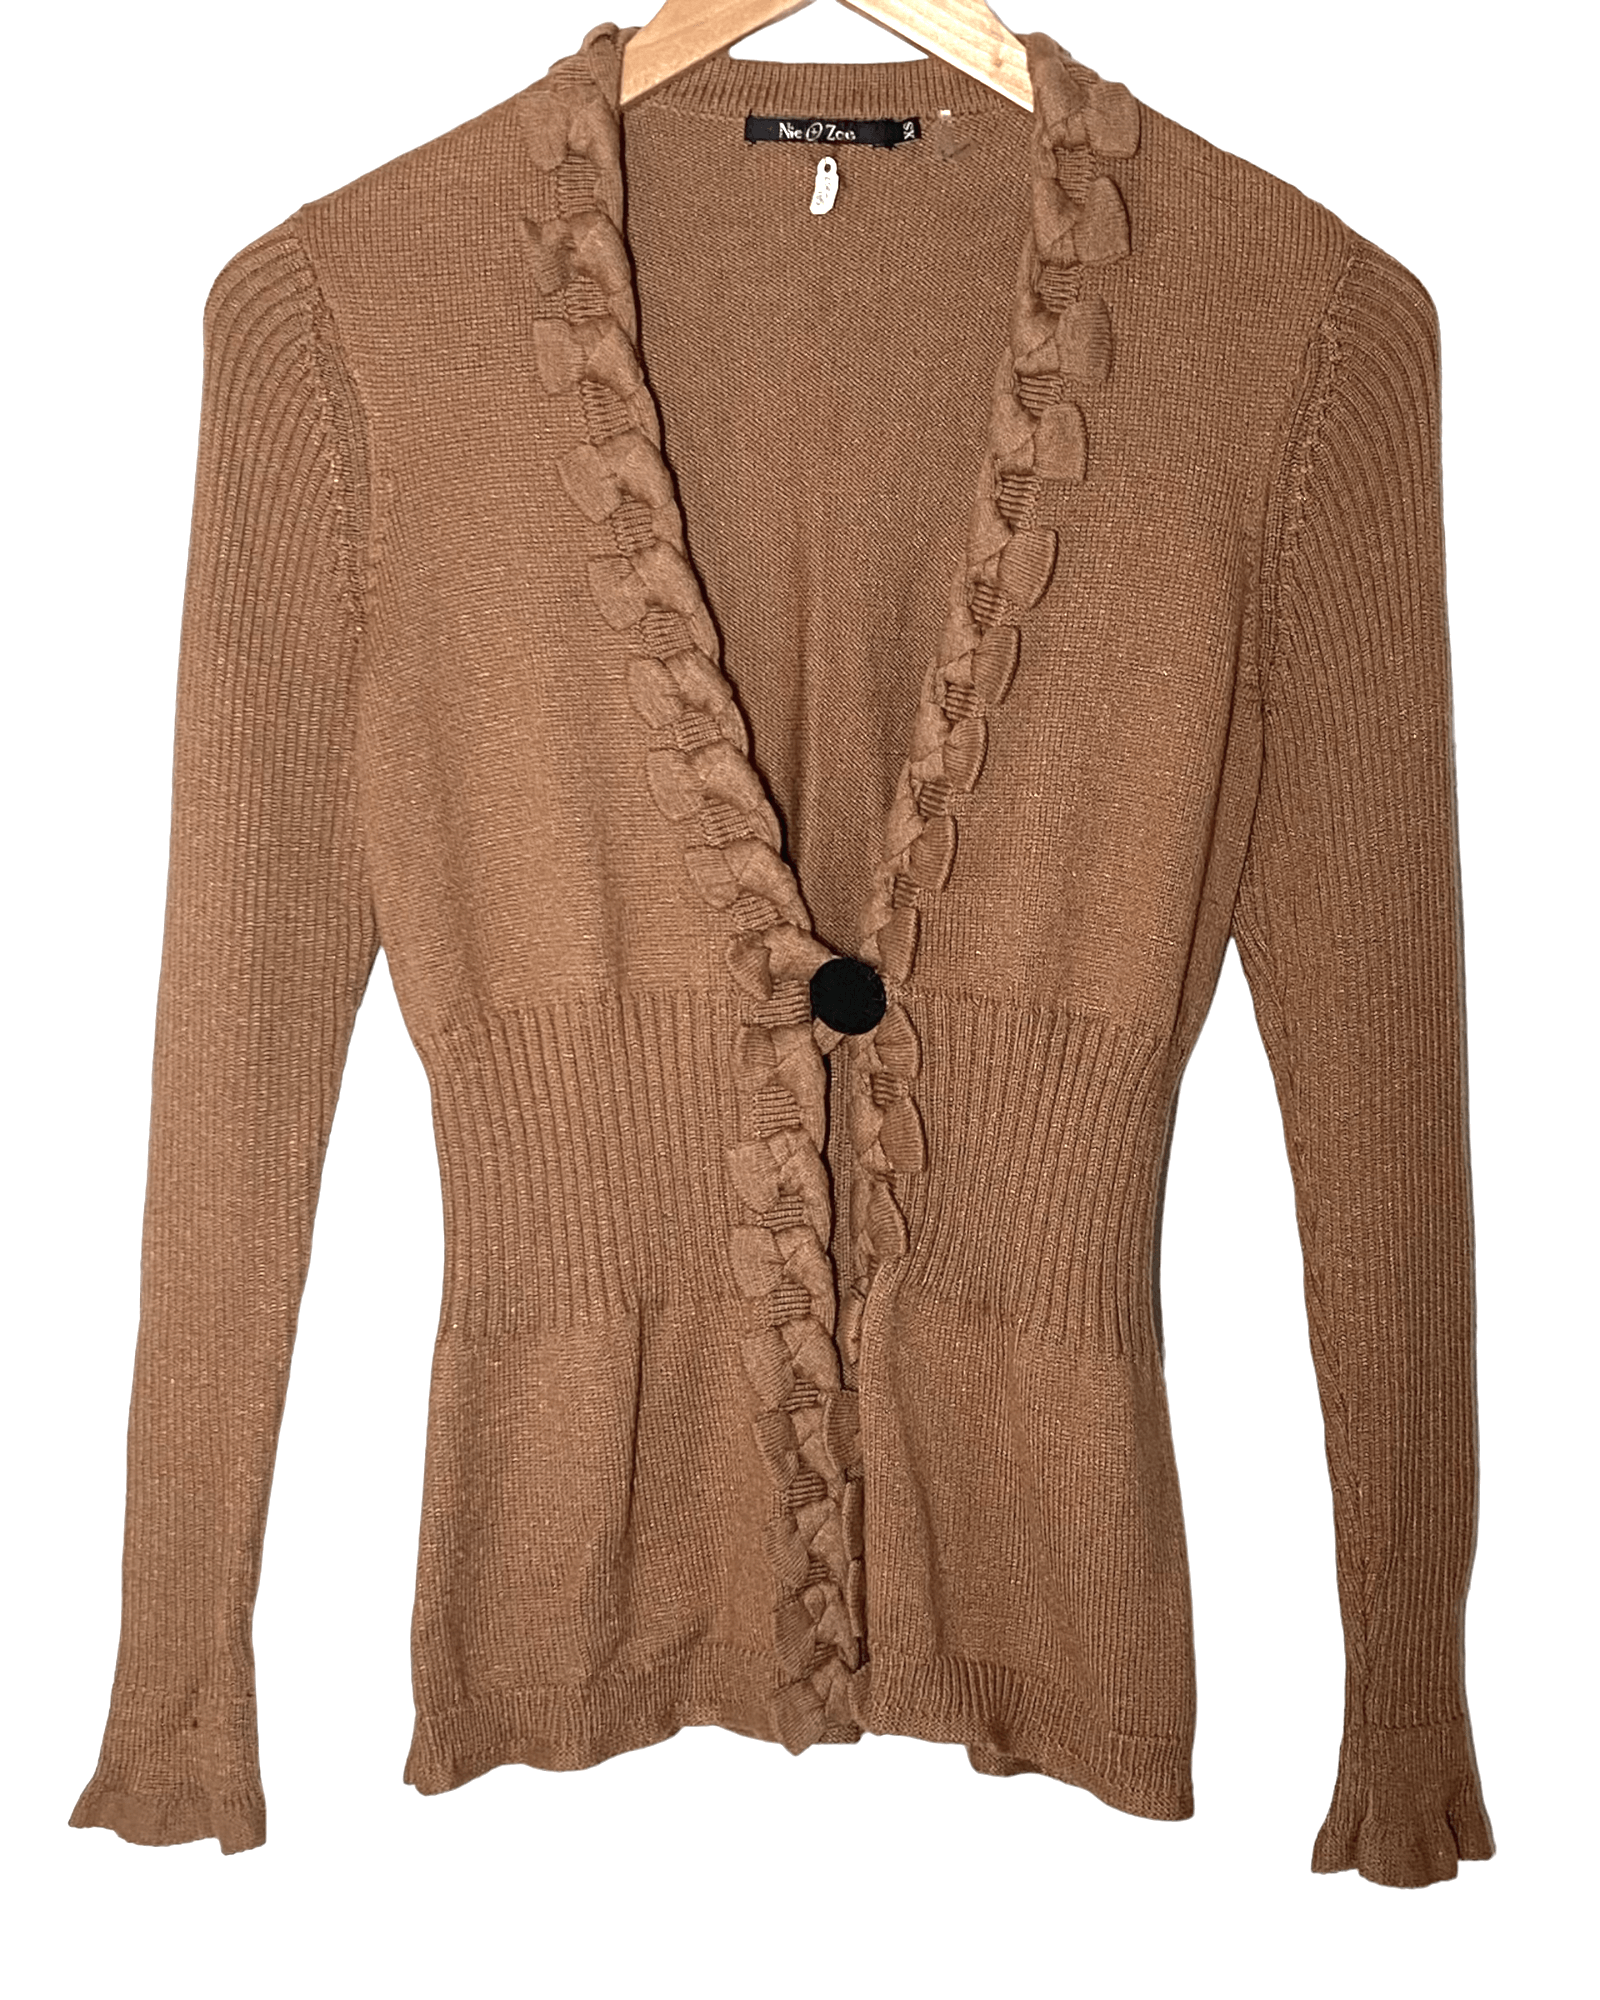 Light Spring NIC + ZOE bronze cardigan sweater